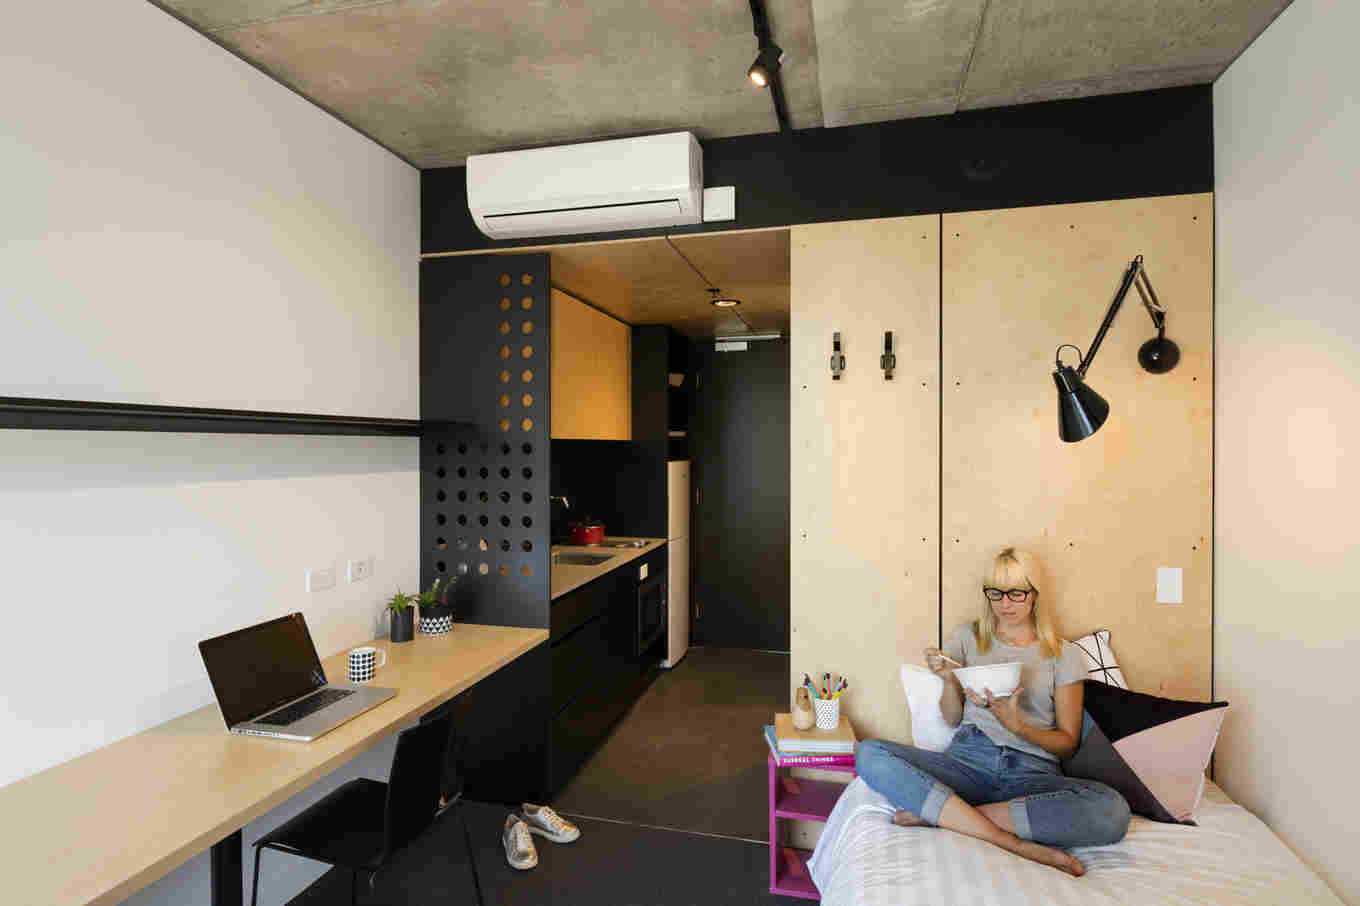 version of the unusual decor of a small dorm room